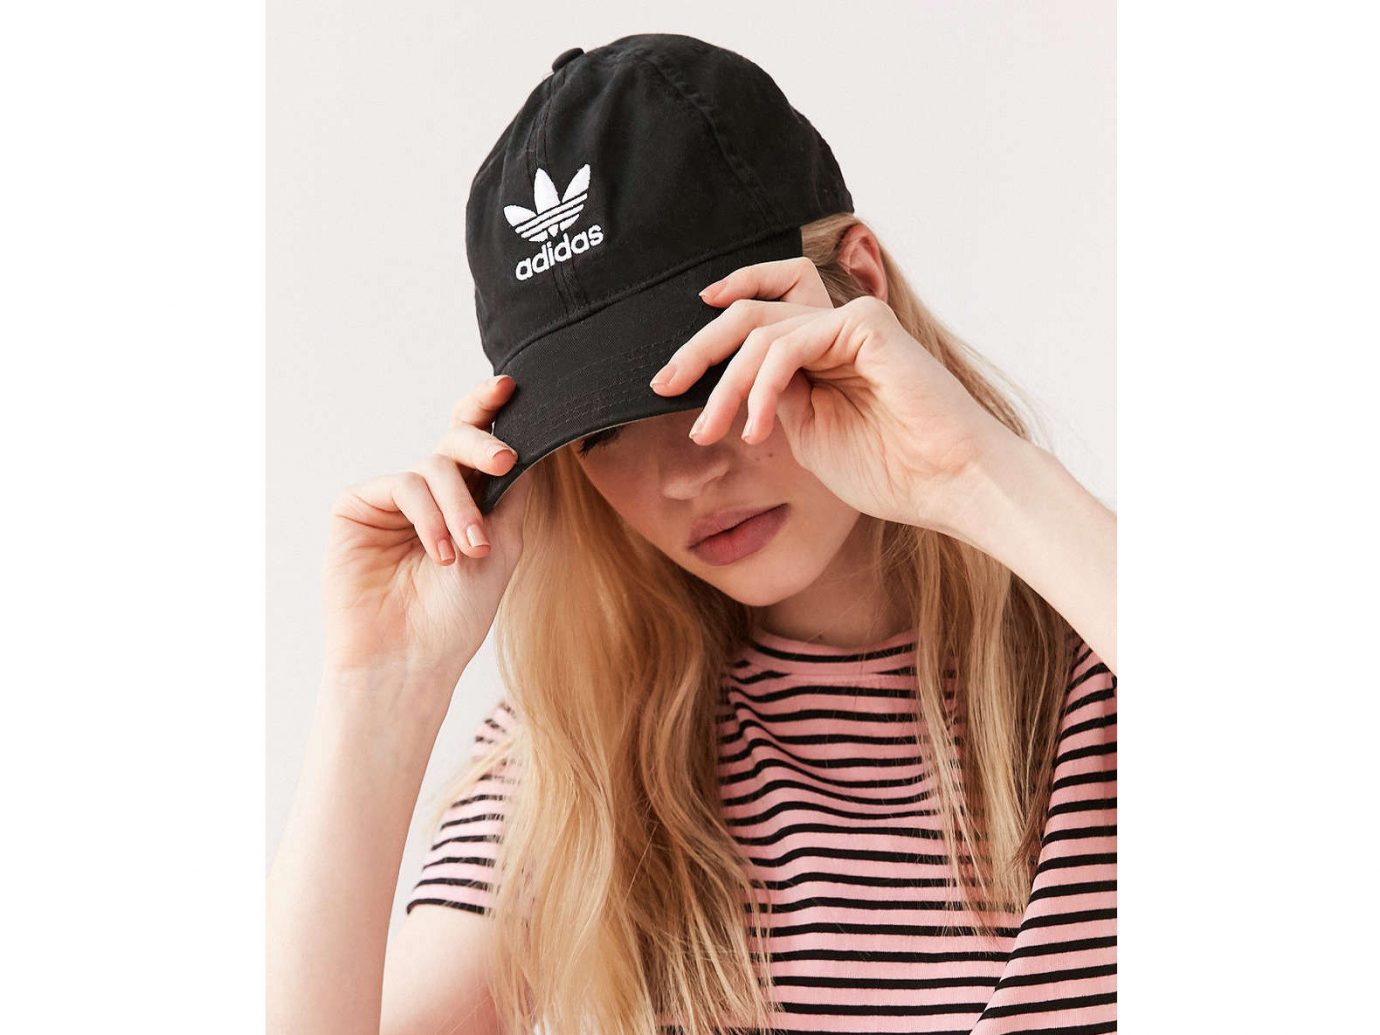 Style + Design Travel Shop person cap clothing headgear beanie wearing sun hat hat knit cap